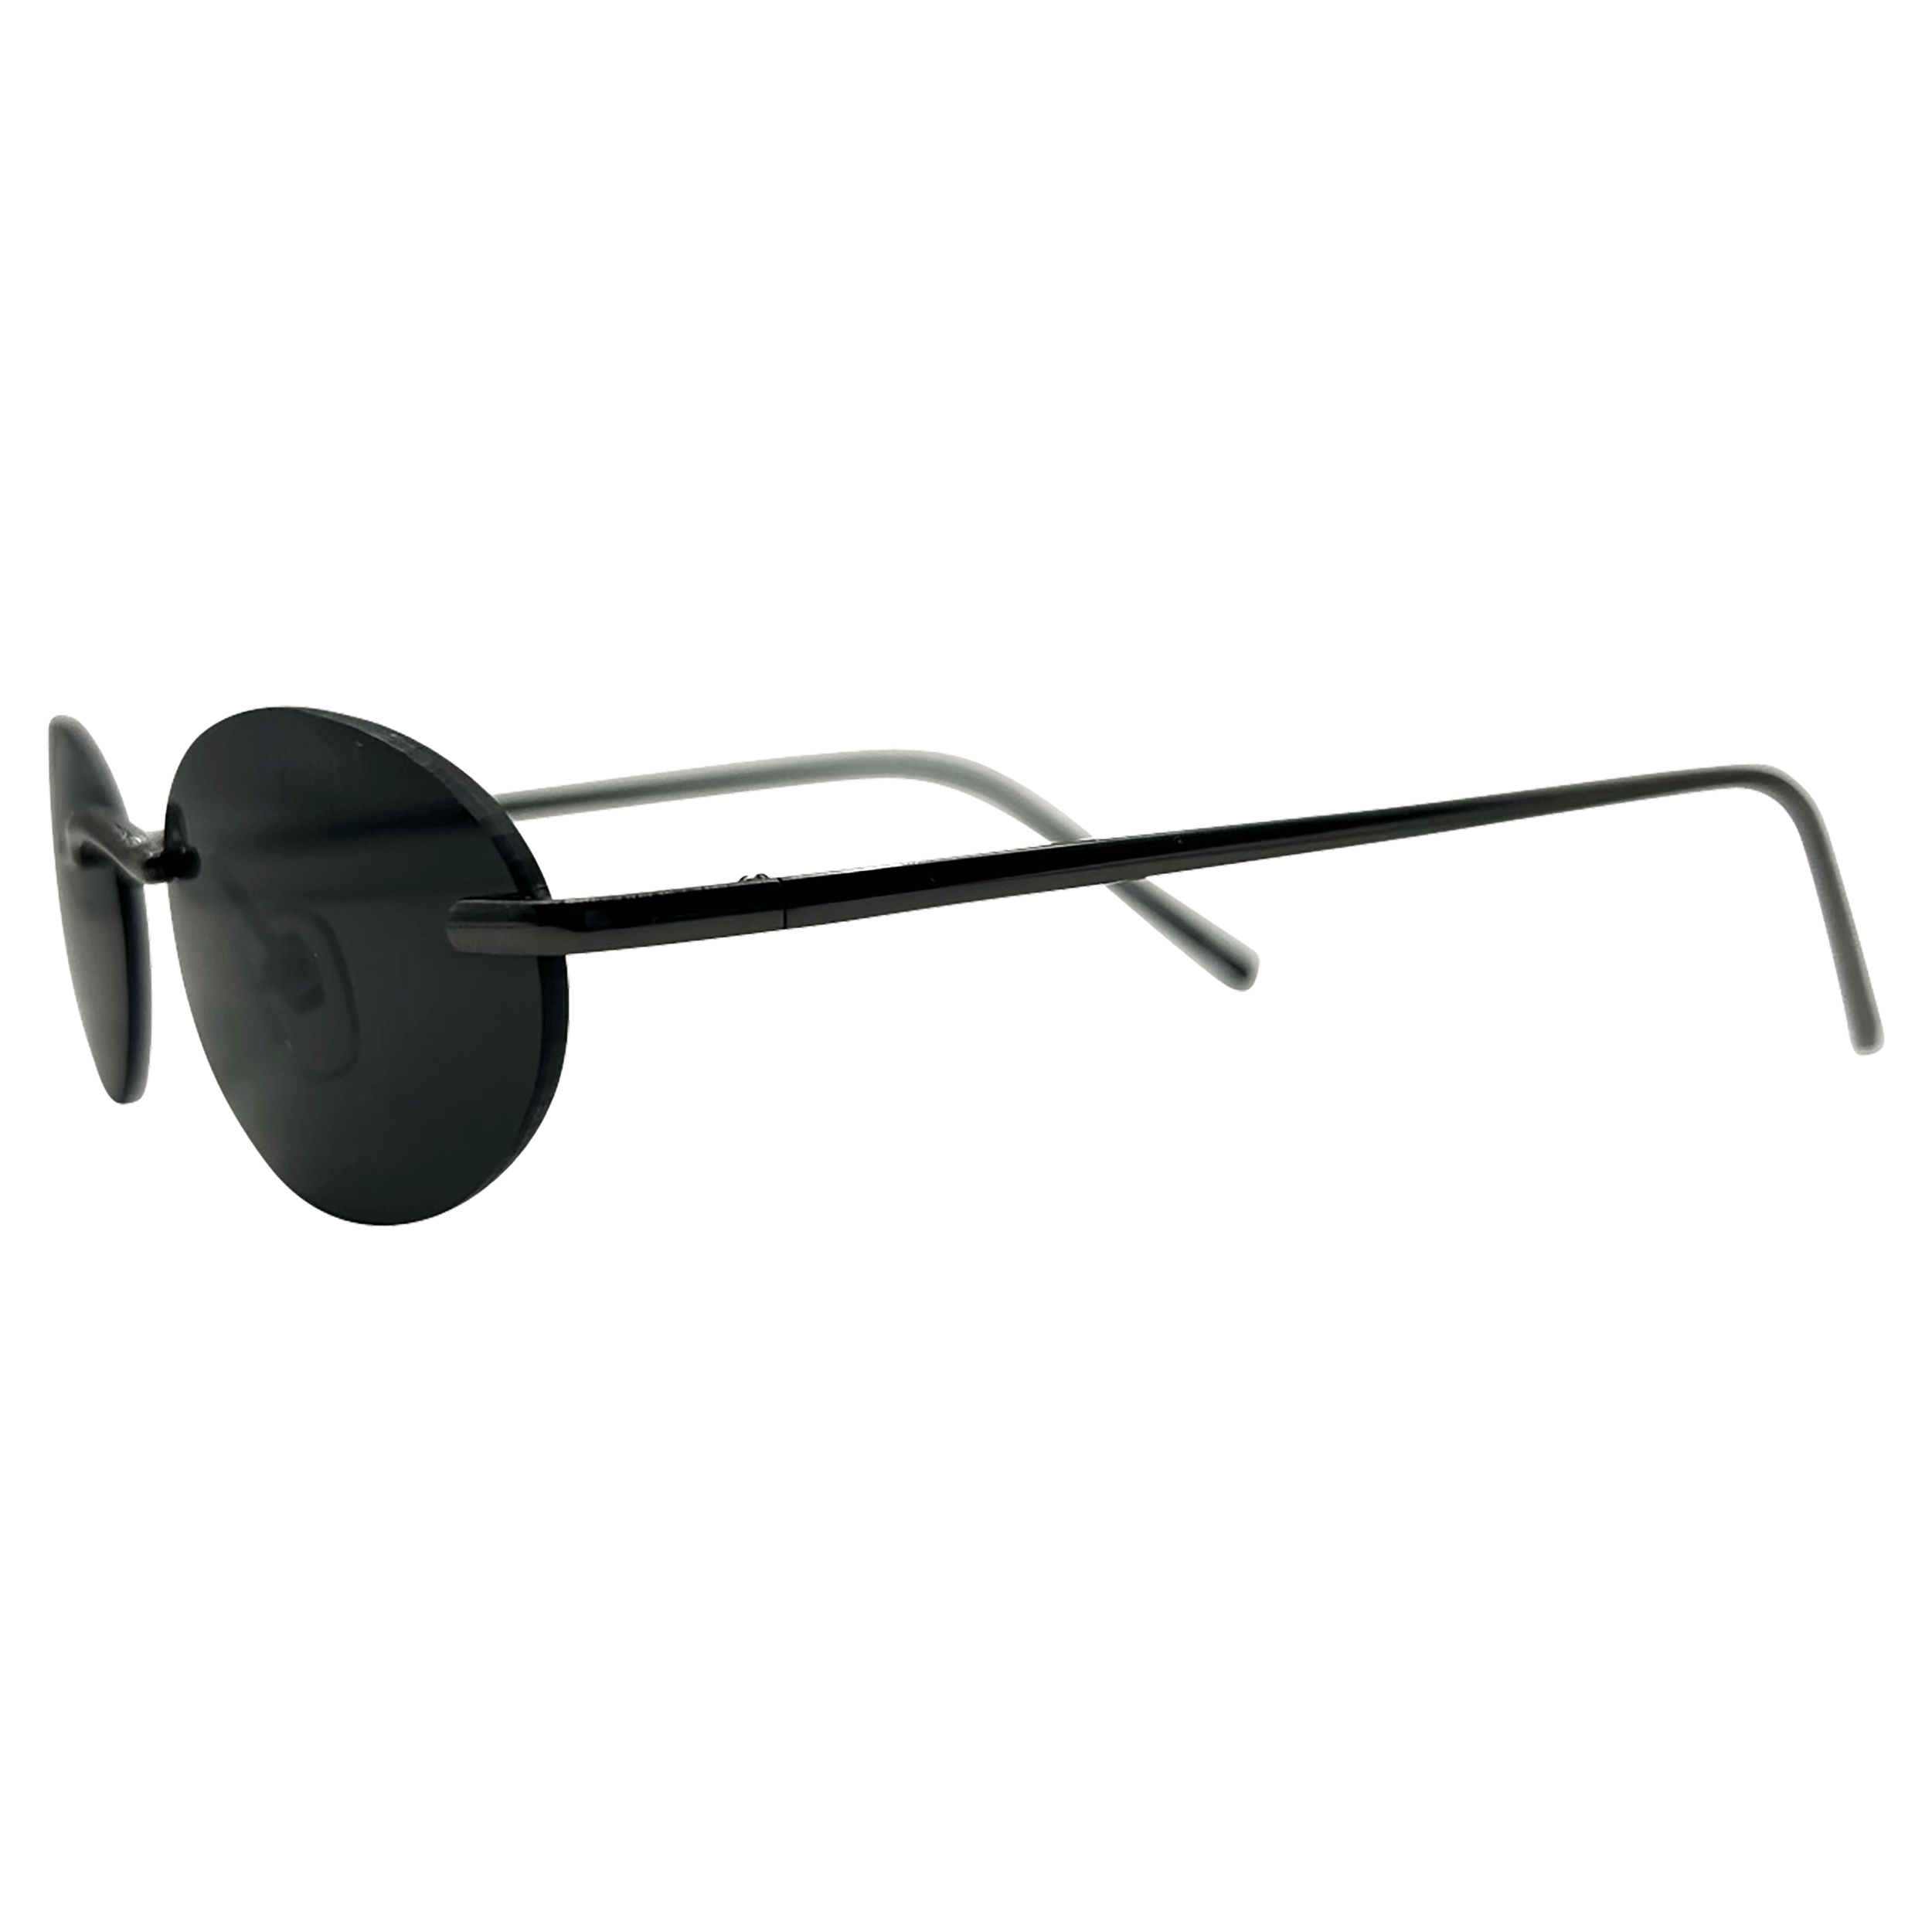 TASSIO Rimless Oval Sunglasses